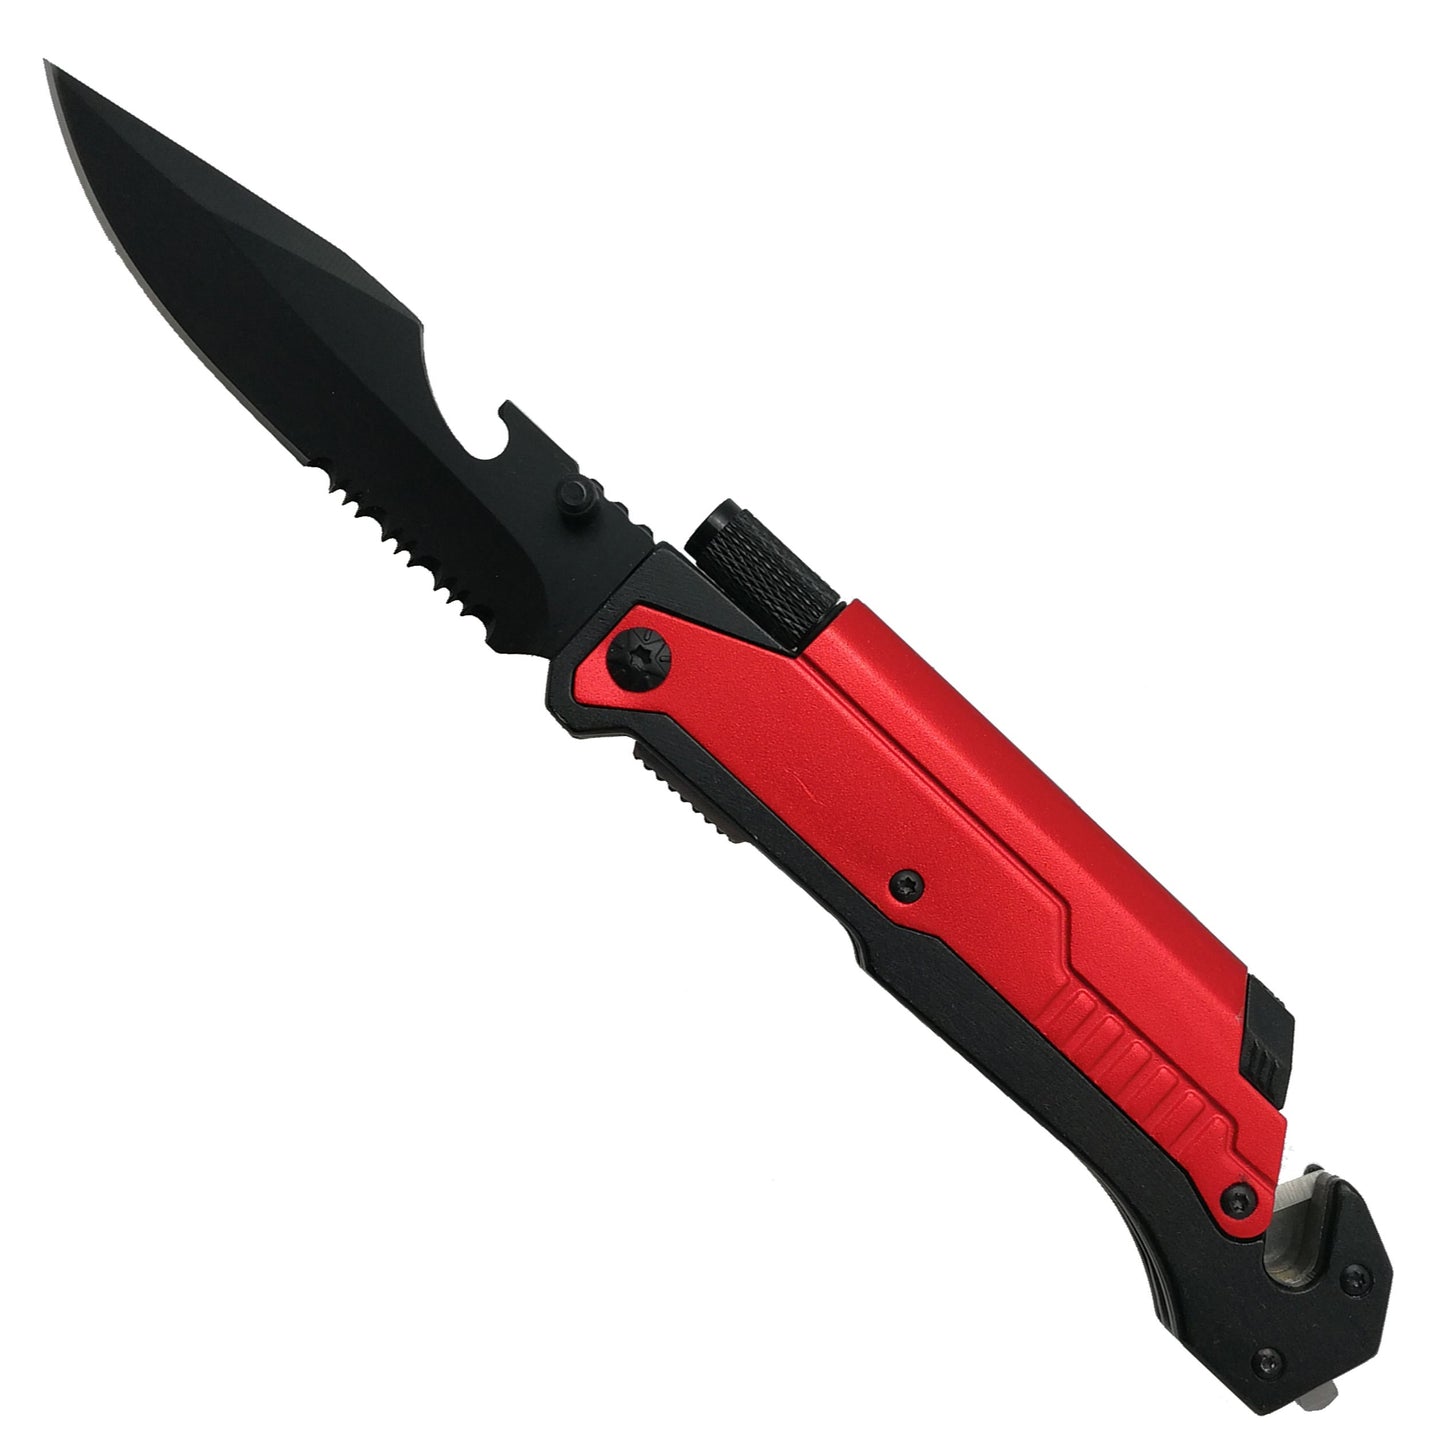 8 1/2" Folding Knife with LED light, cutter, glass breaker - Red